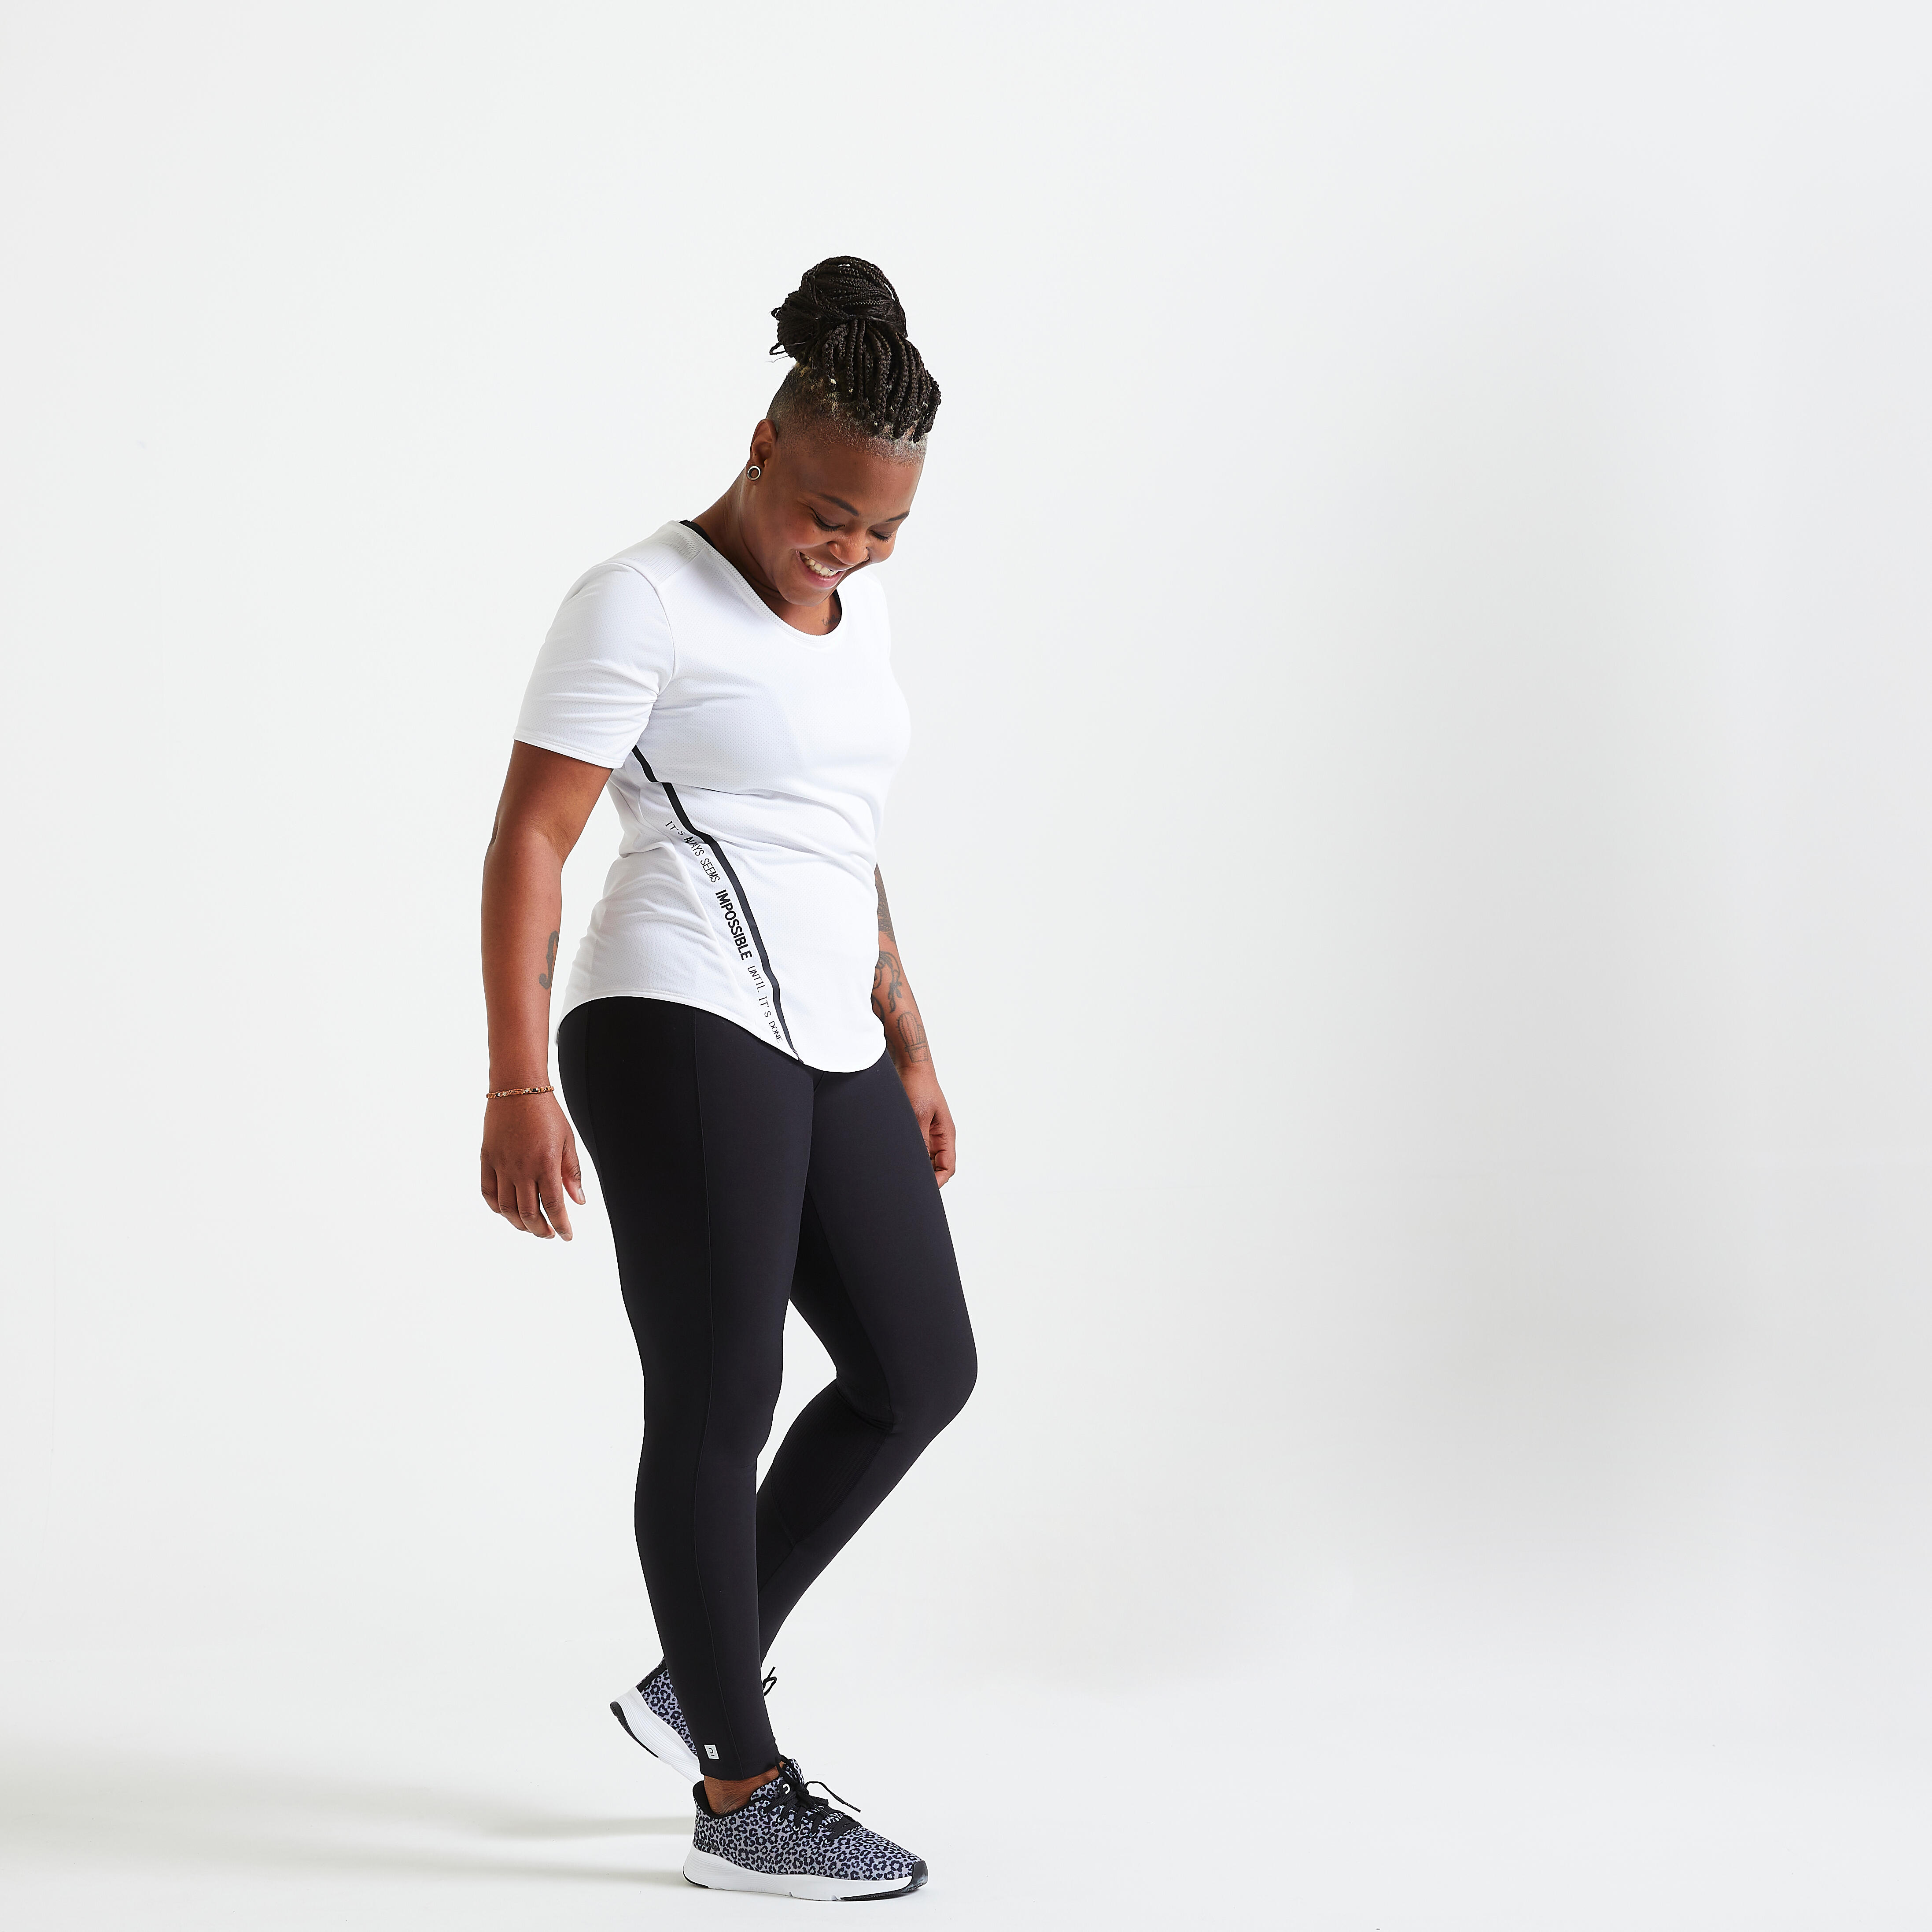 Legging de sport femme – FTI 120 noir - DOMYOS